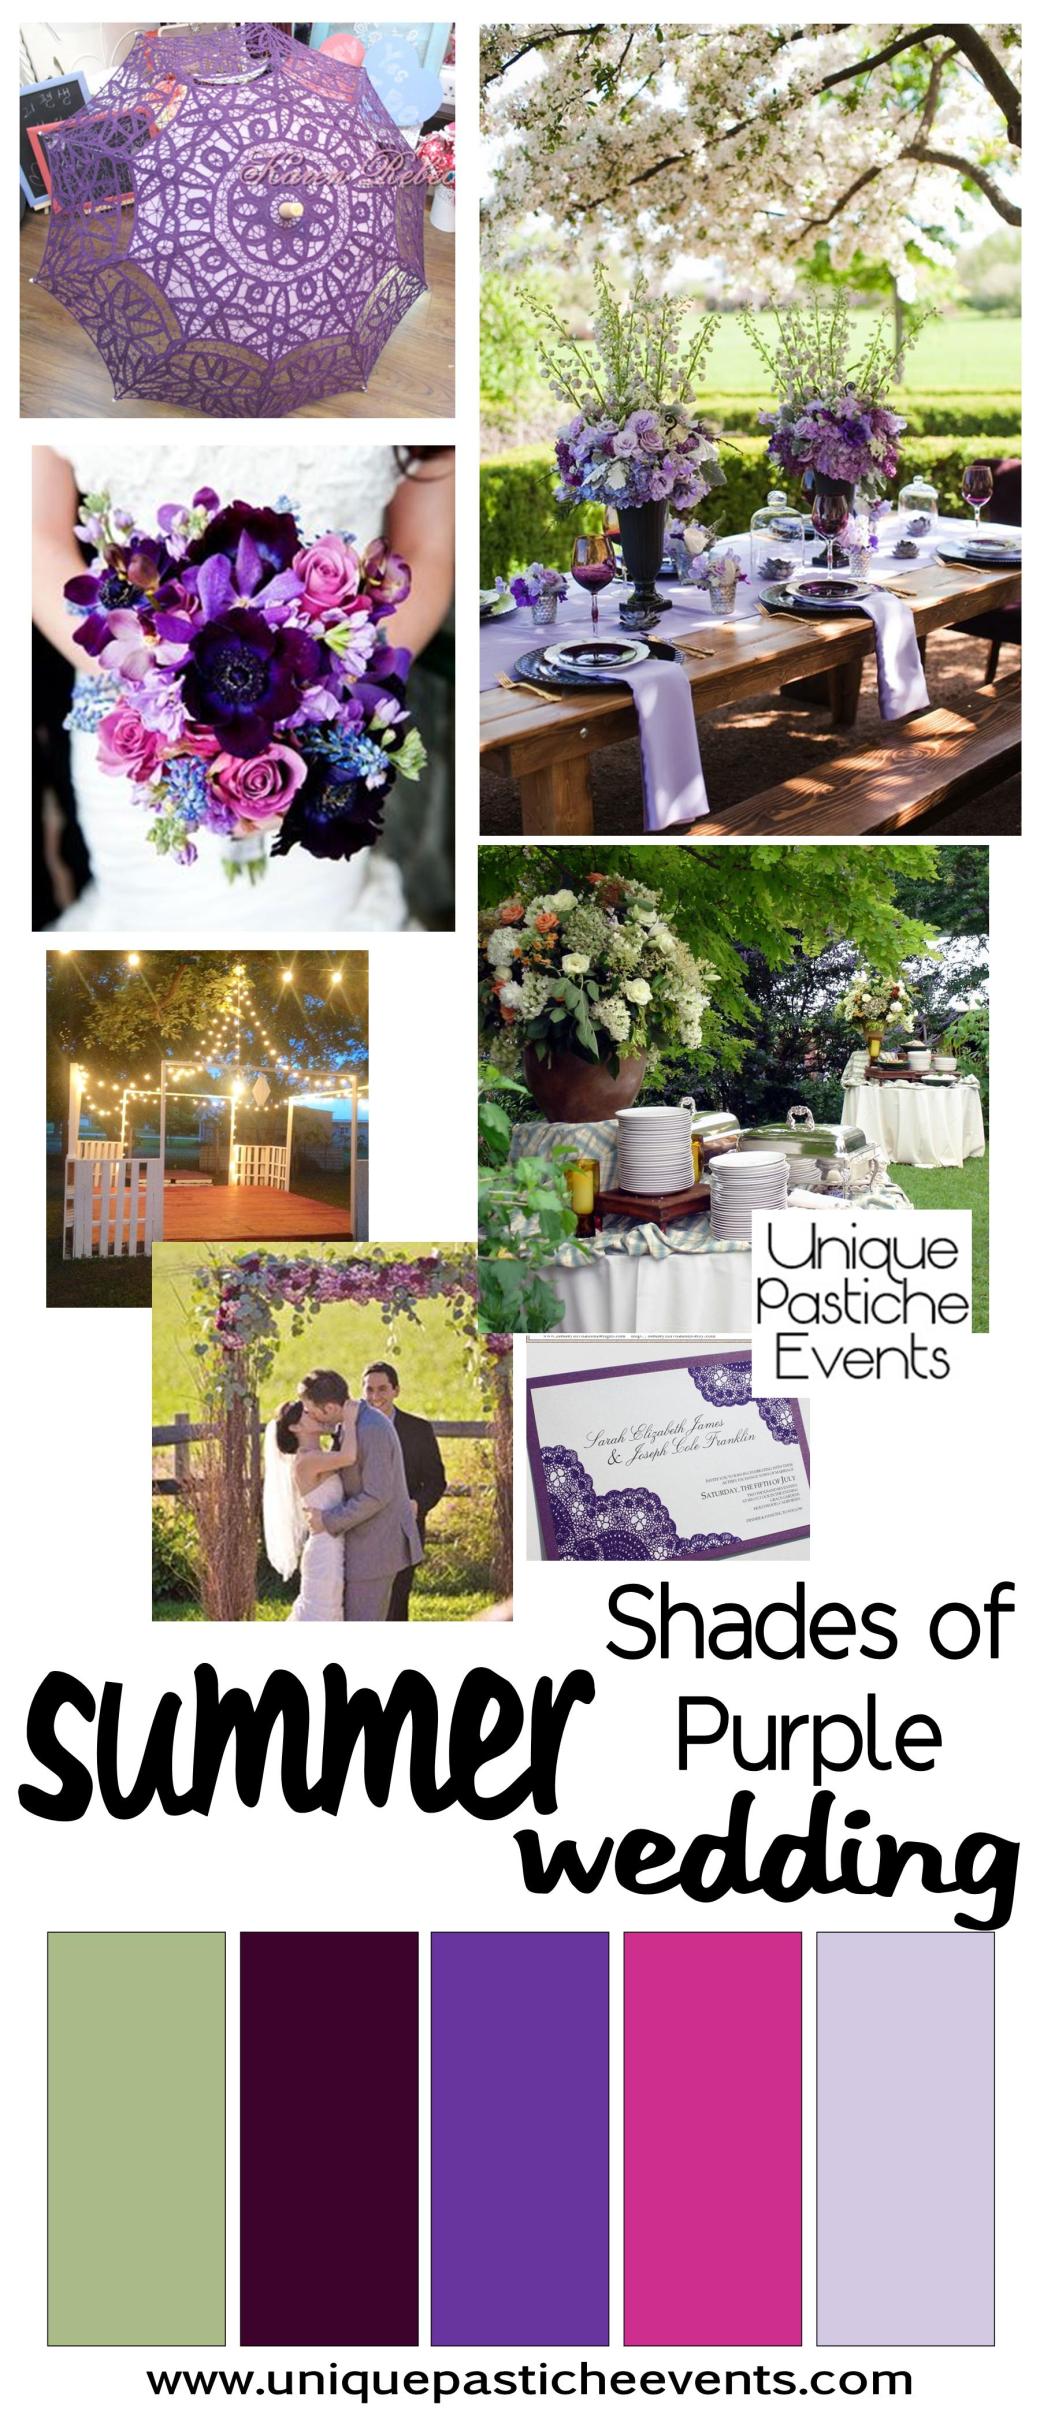 Outdoor Summer Wedding in Shades of Purple